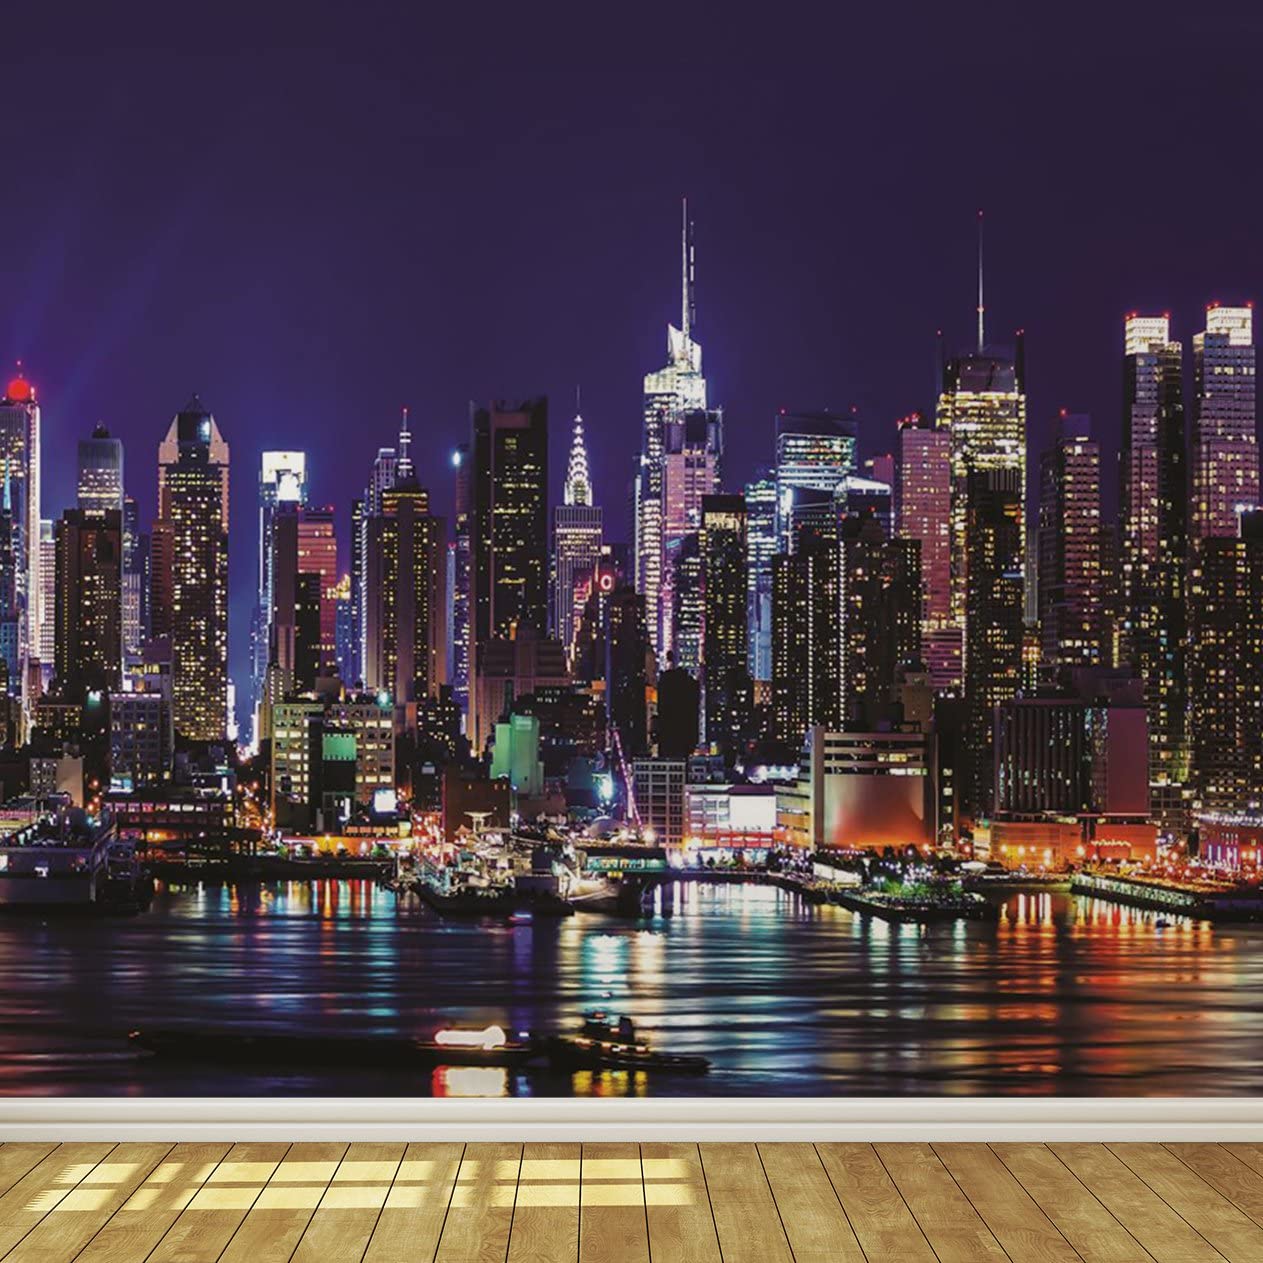 New York City Skyline At Night Wallpaper Mural Amazon Co Uk